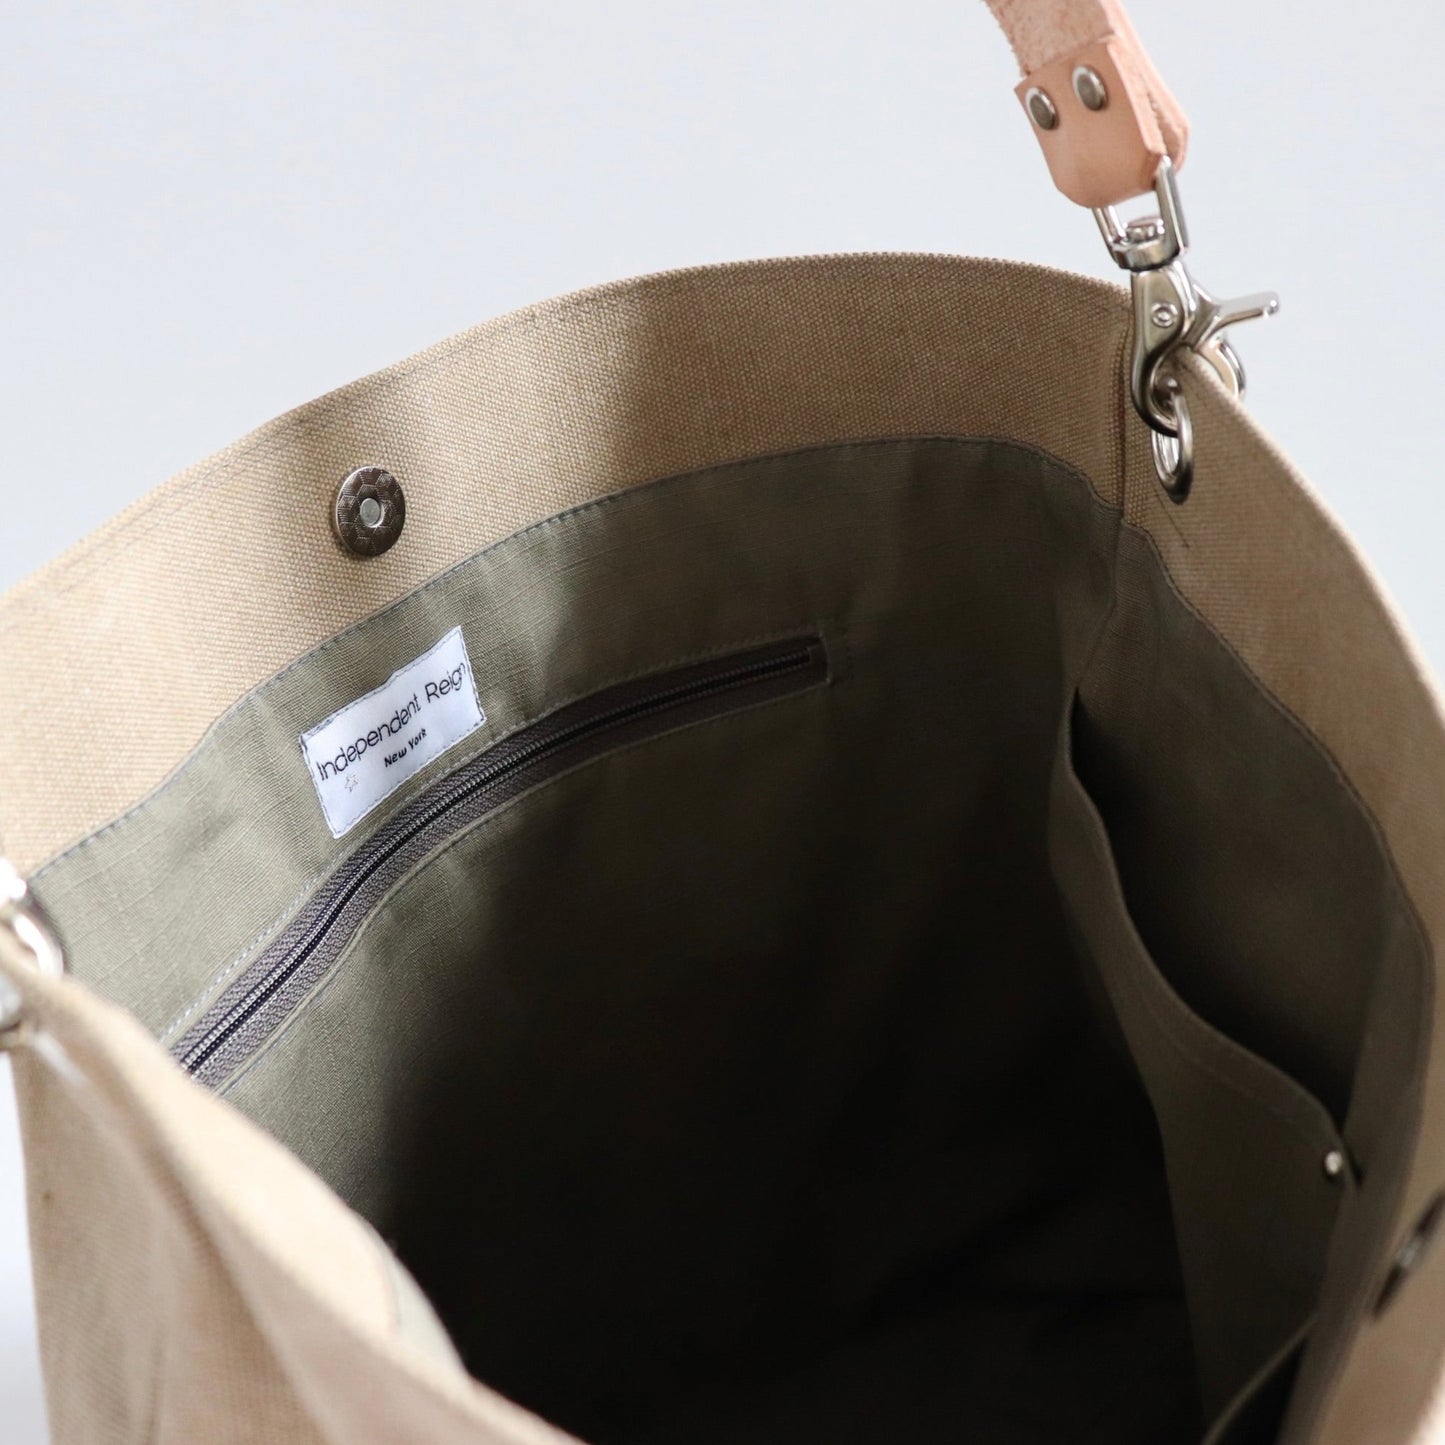 Interior bag lining with zipper pocket and slip pockets